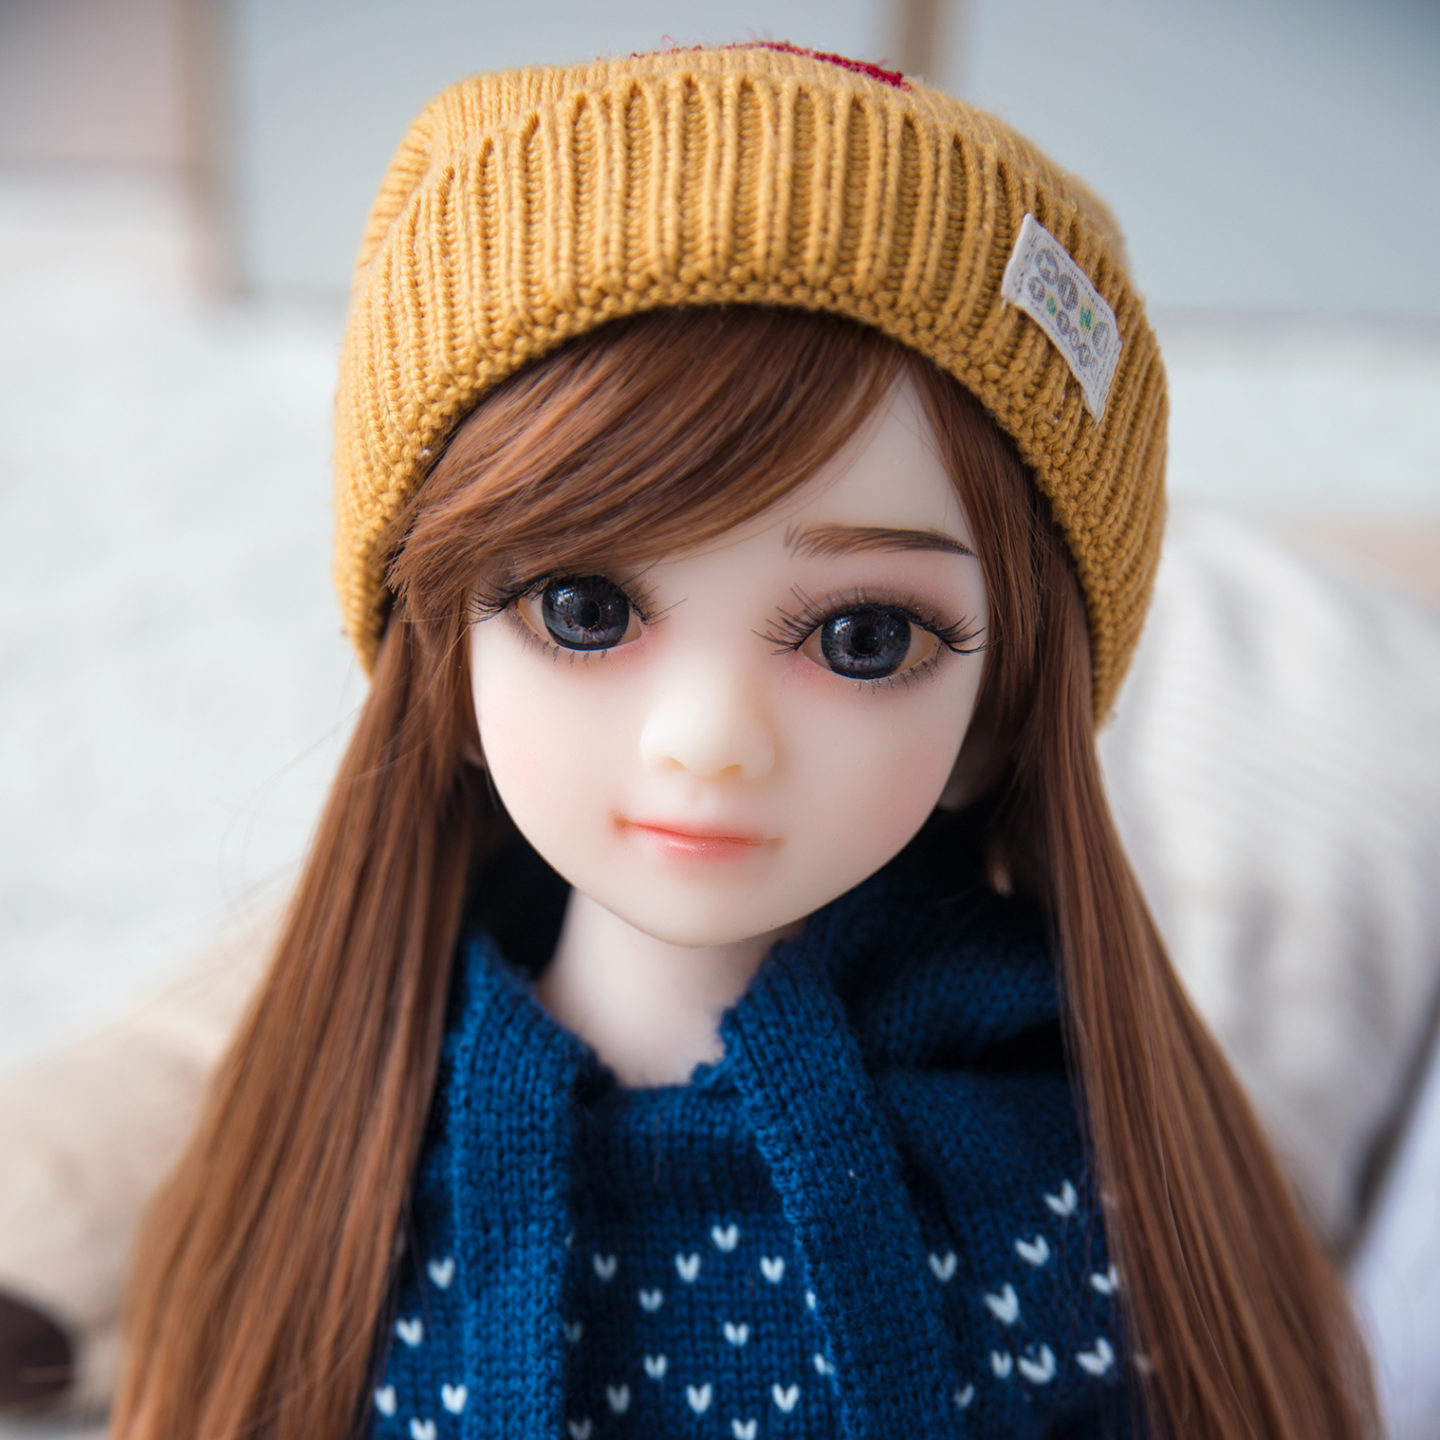 Elina - Cutie Doll 2' 2 (65cm) Cup A